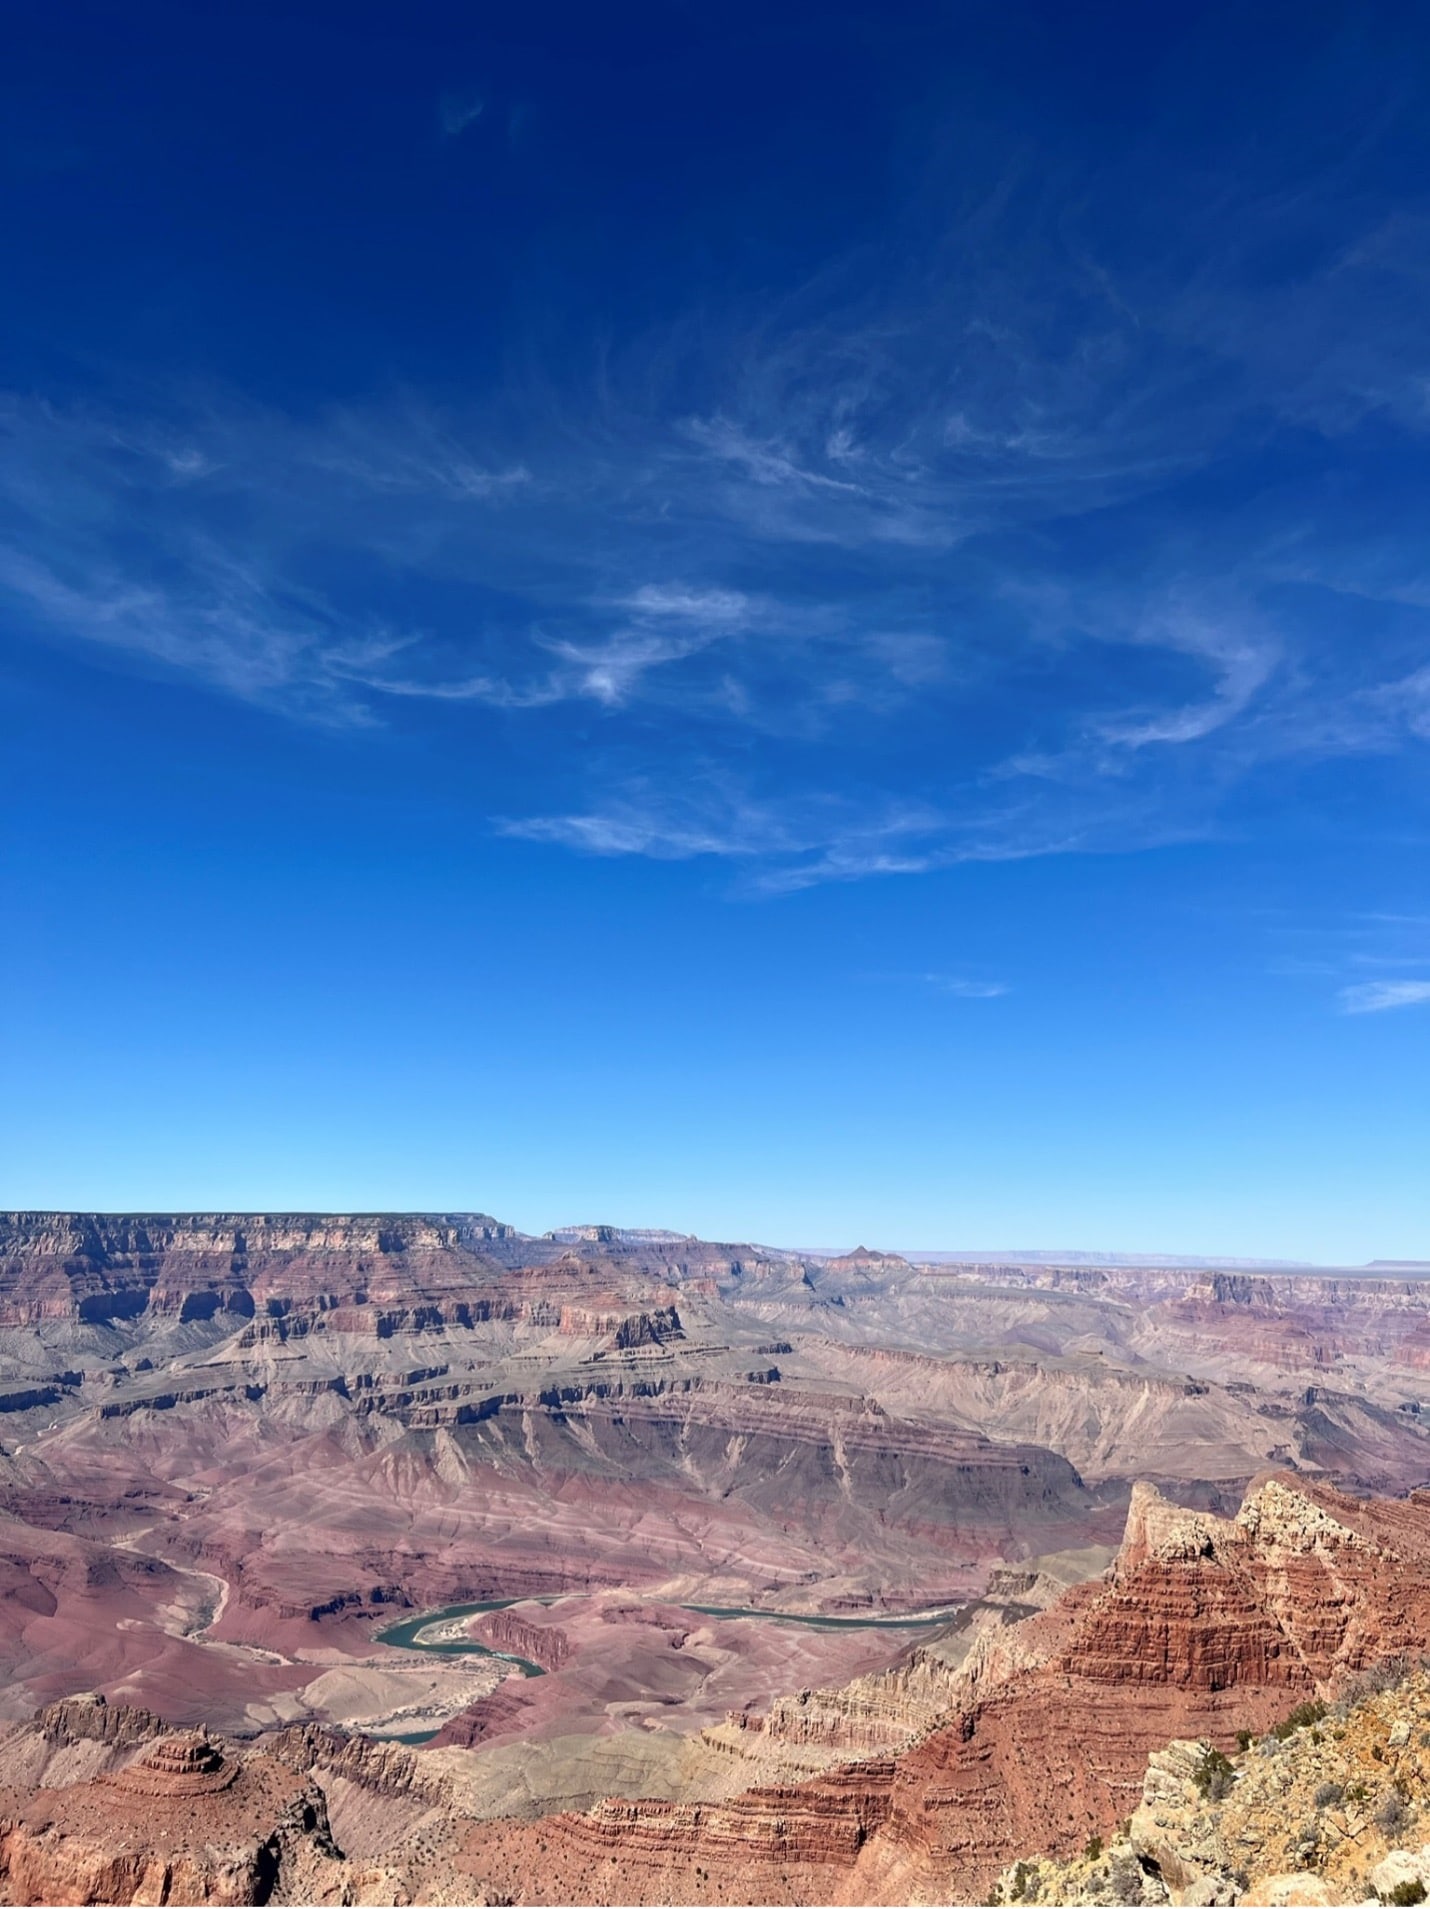 A blue sky above a canyon